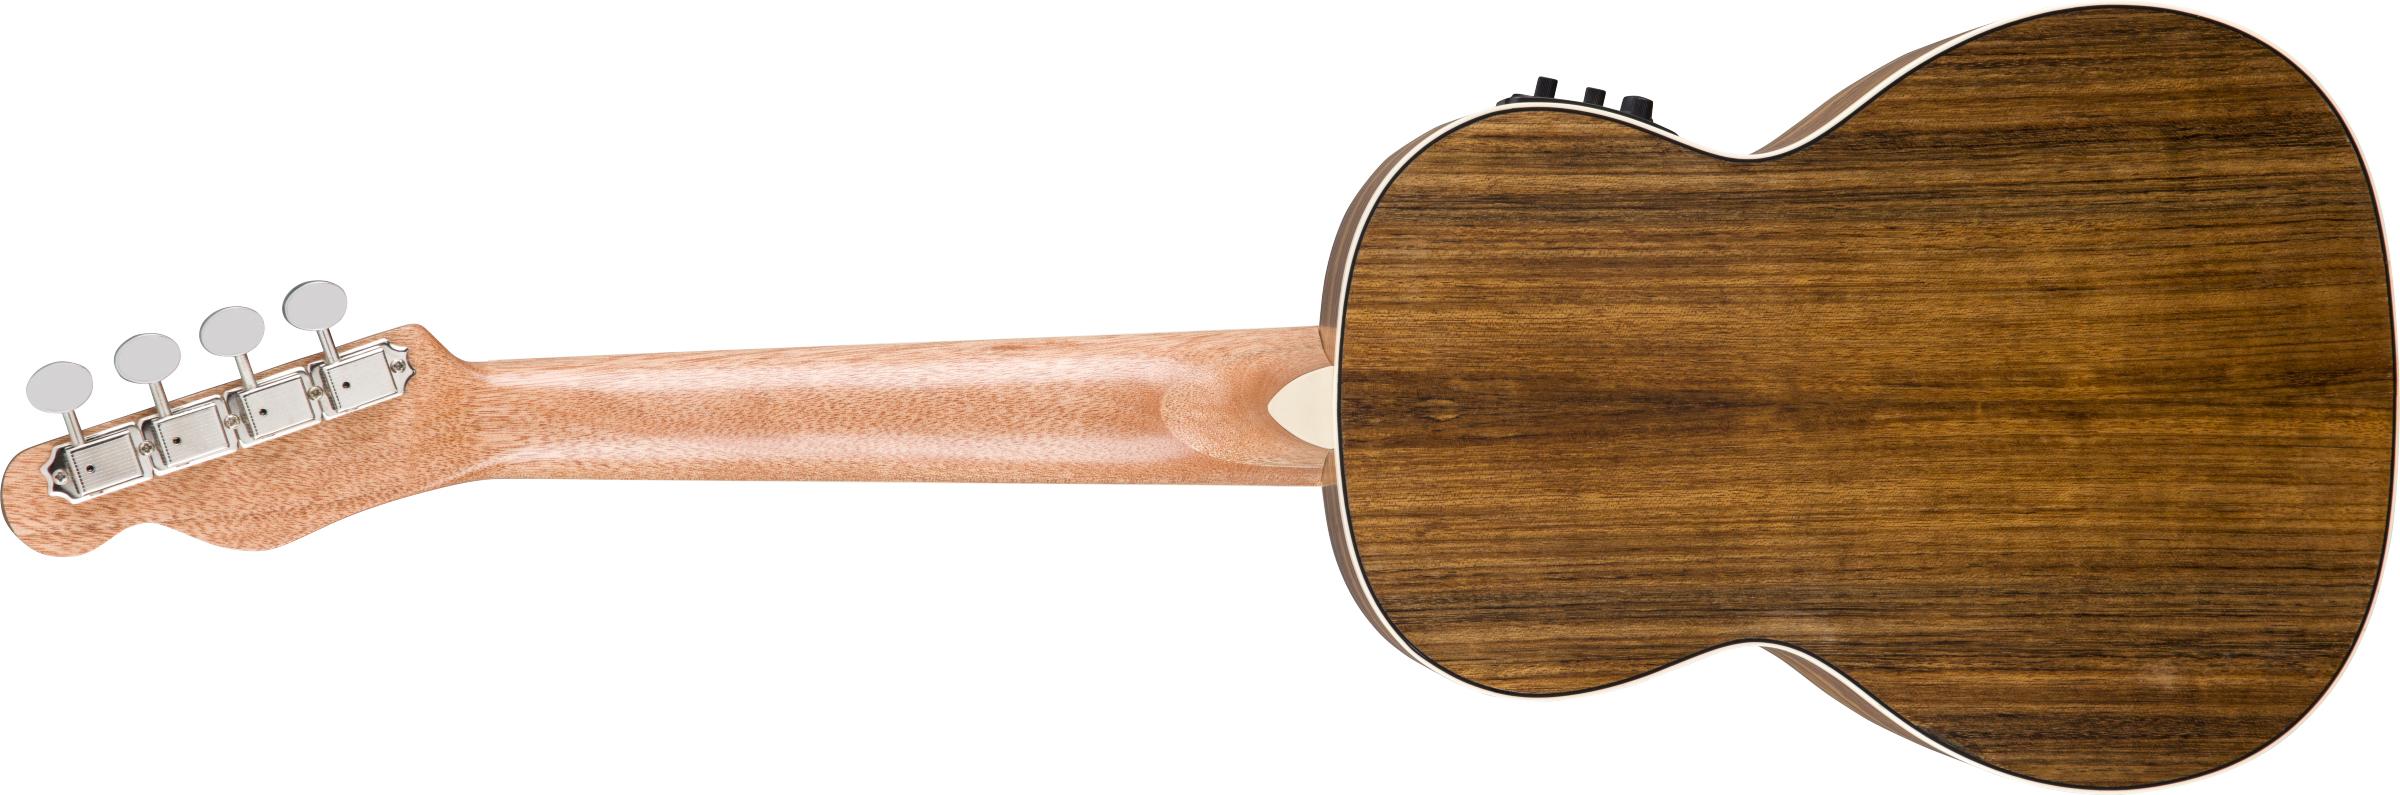 Fender Rincon Tenor Ukulele V2, Ovangkol Fingerboard, Natural 0971652121